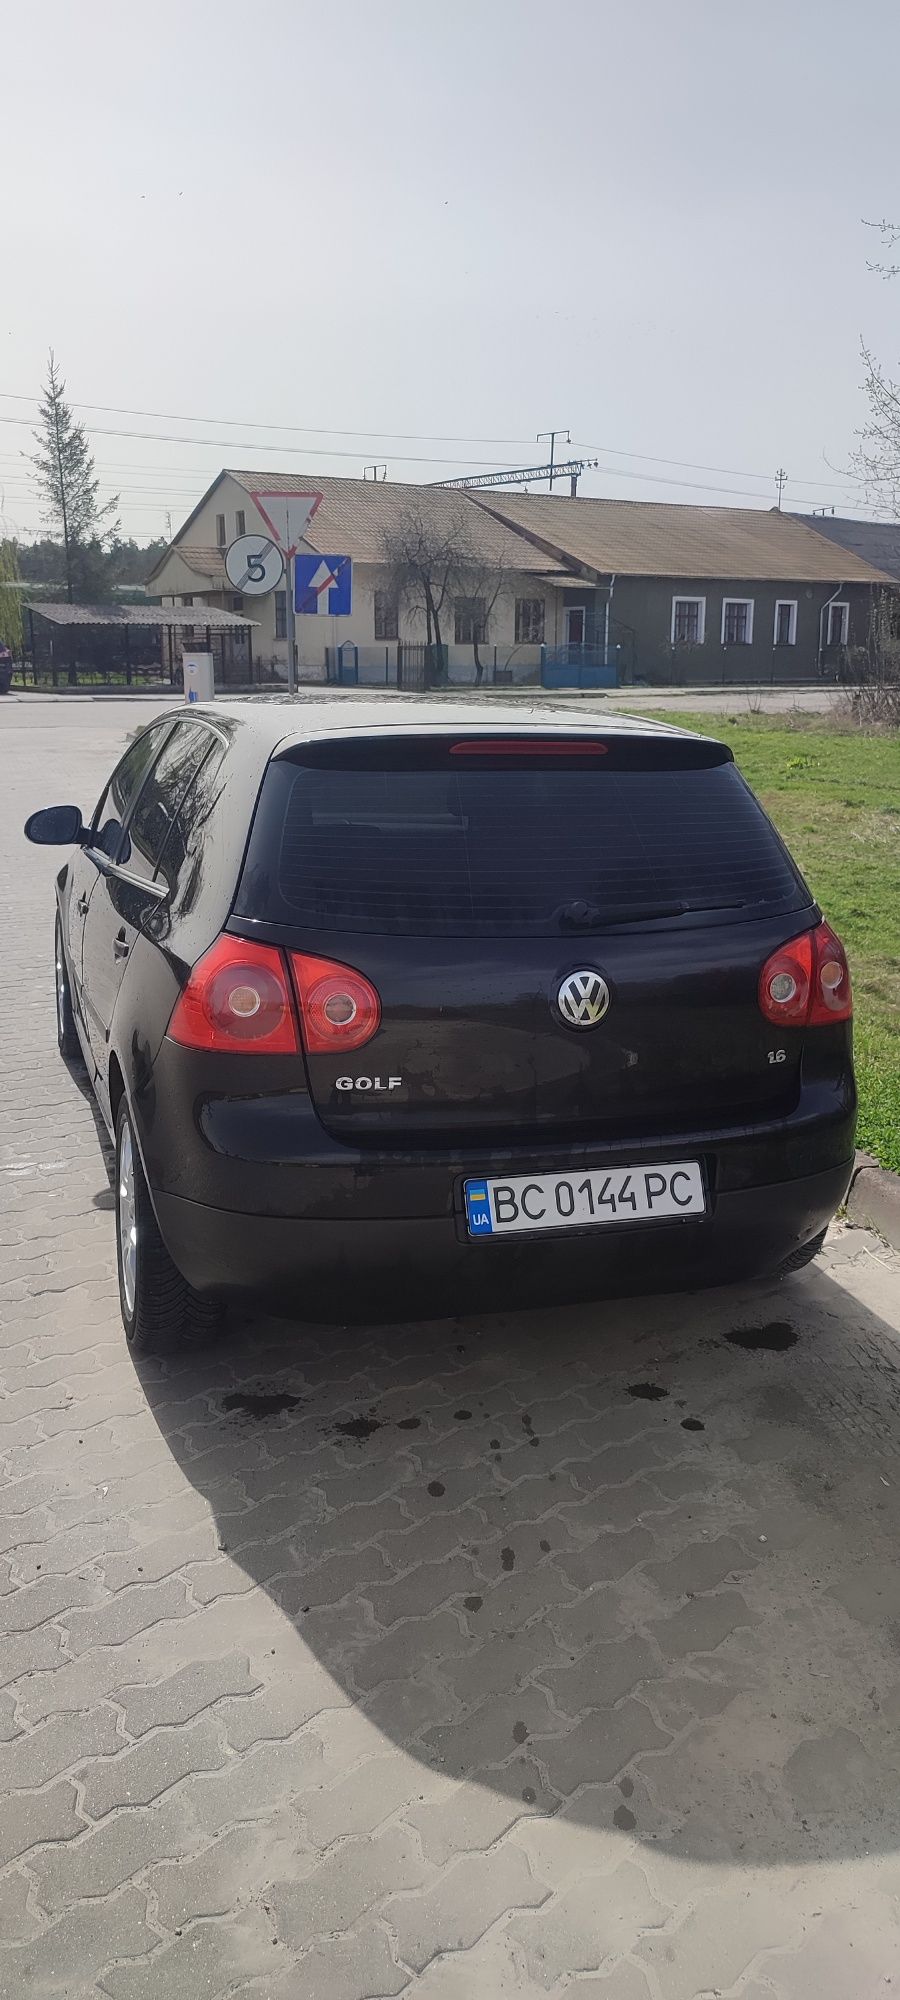 Гольф 5, Golf 5. Volkswagen